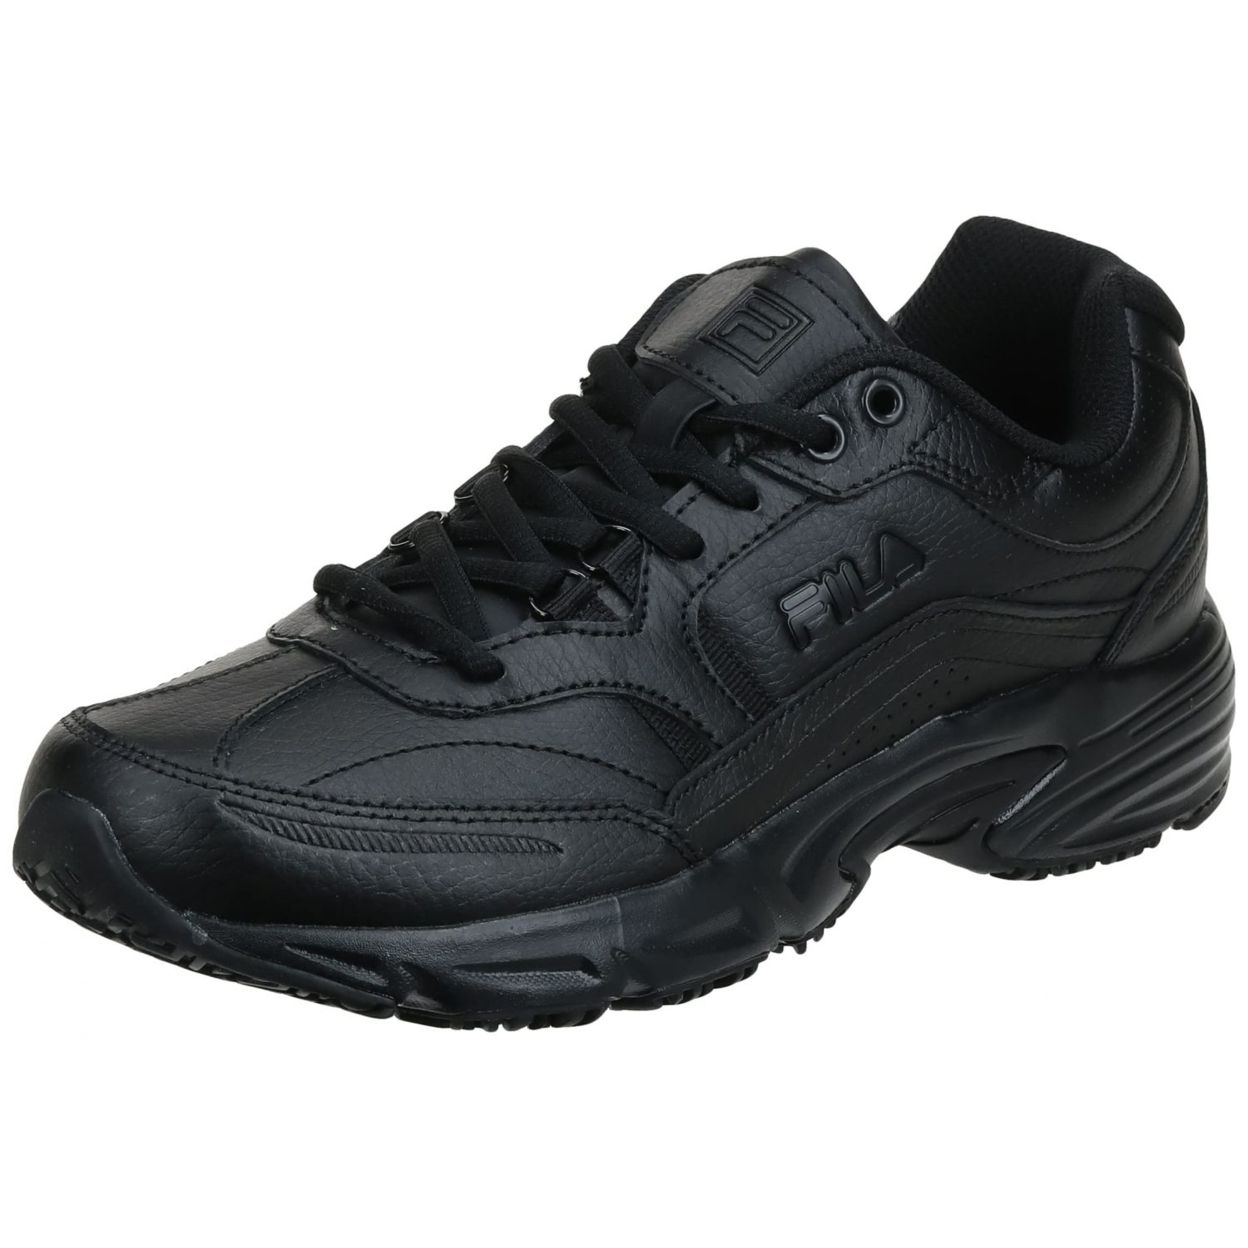 Fila Men's Memory Workshift-m Shoes M US Men - Black/black/black, 6.5 Wide